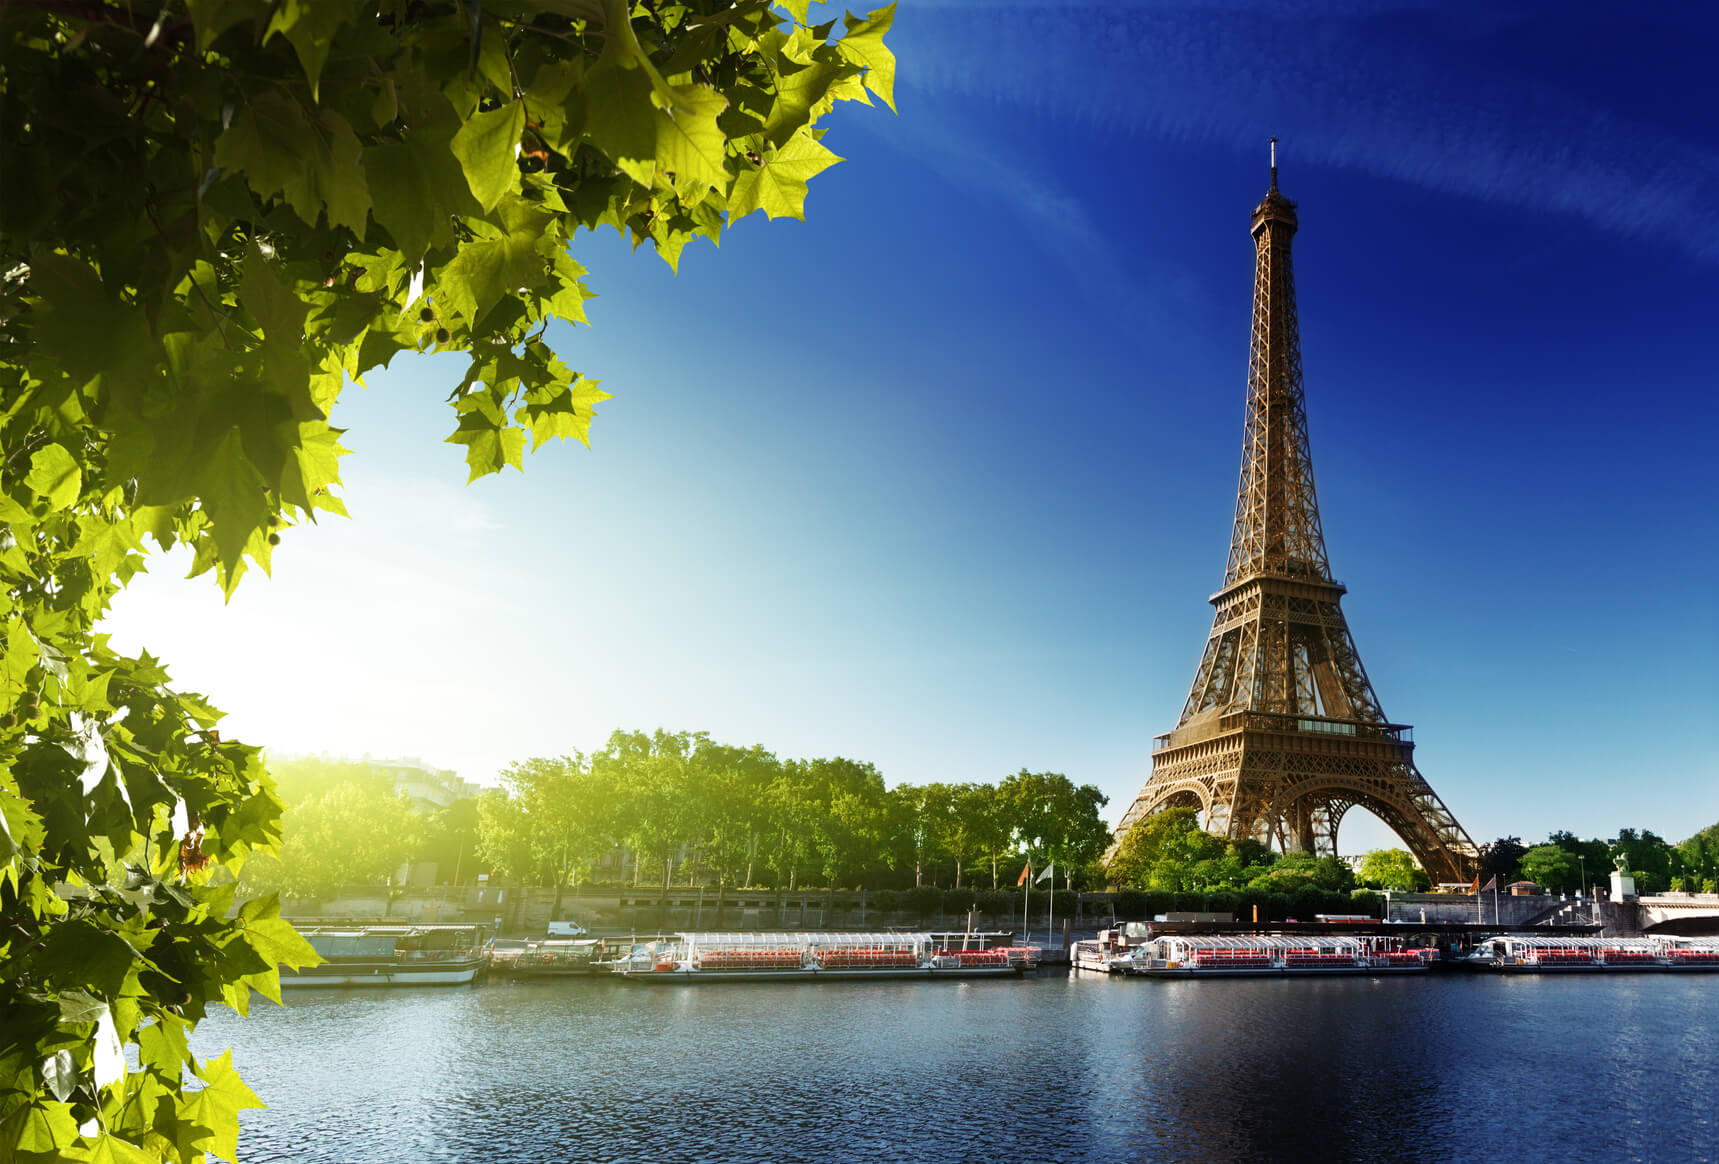 Flight deals from Bangkok, Thailand to Paris, France | Secret Flying